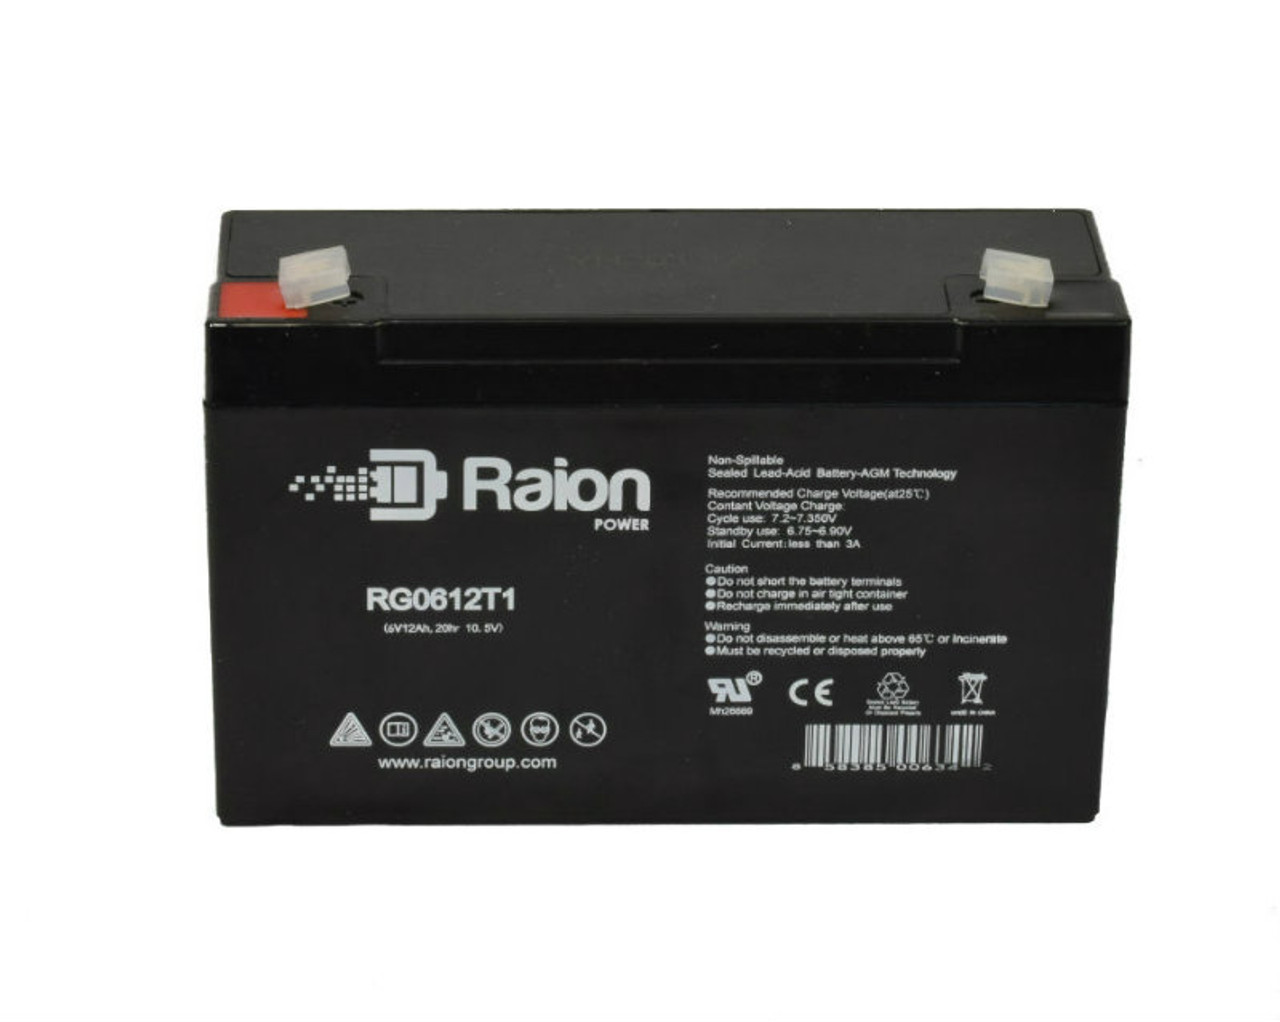 Raion Power RG06120T1 Replacement Battery Cartridge for Upsonic LAN 75